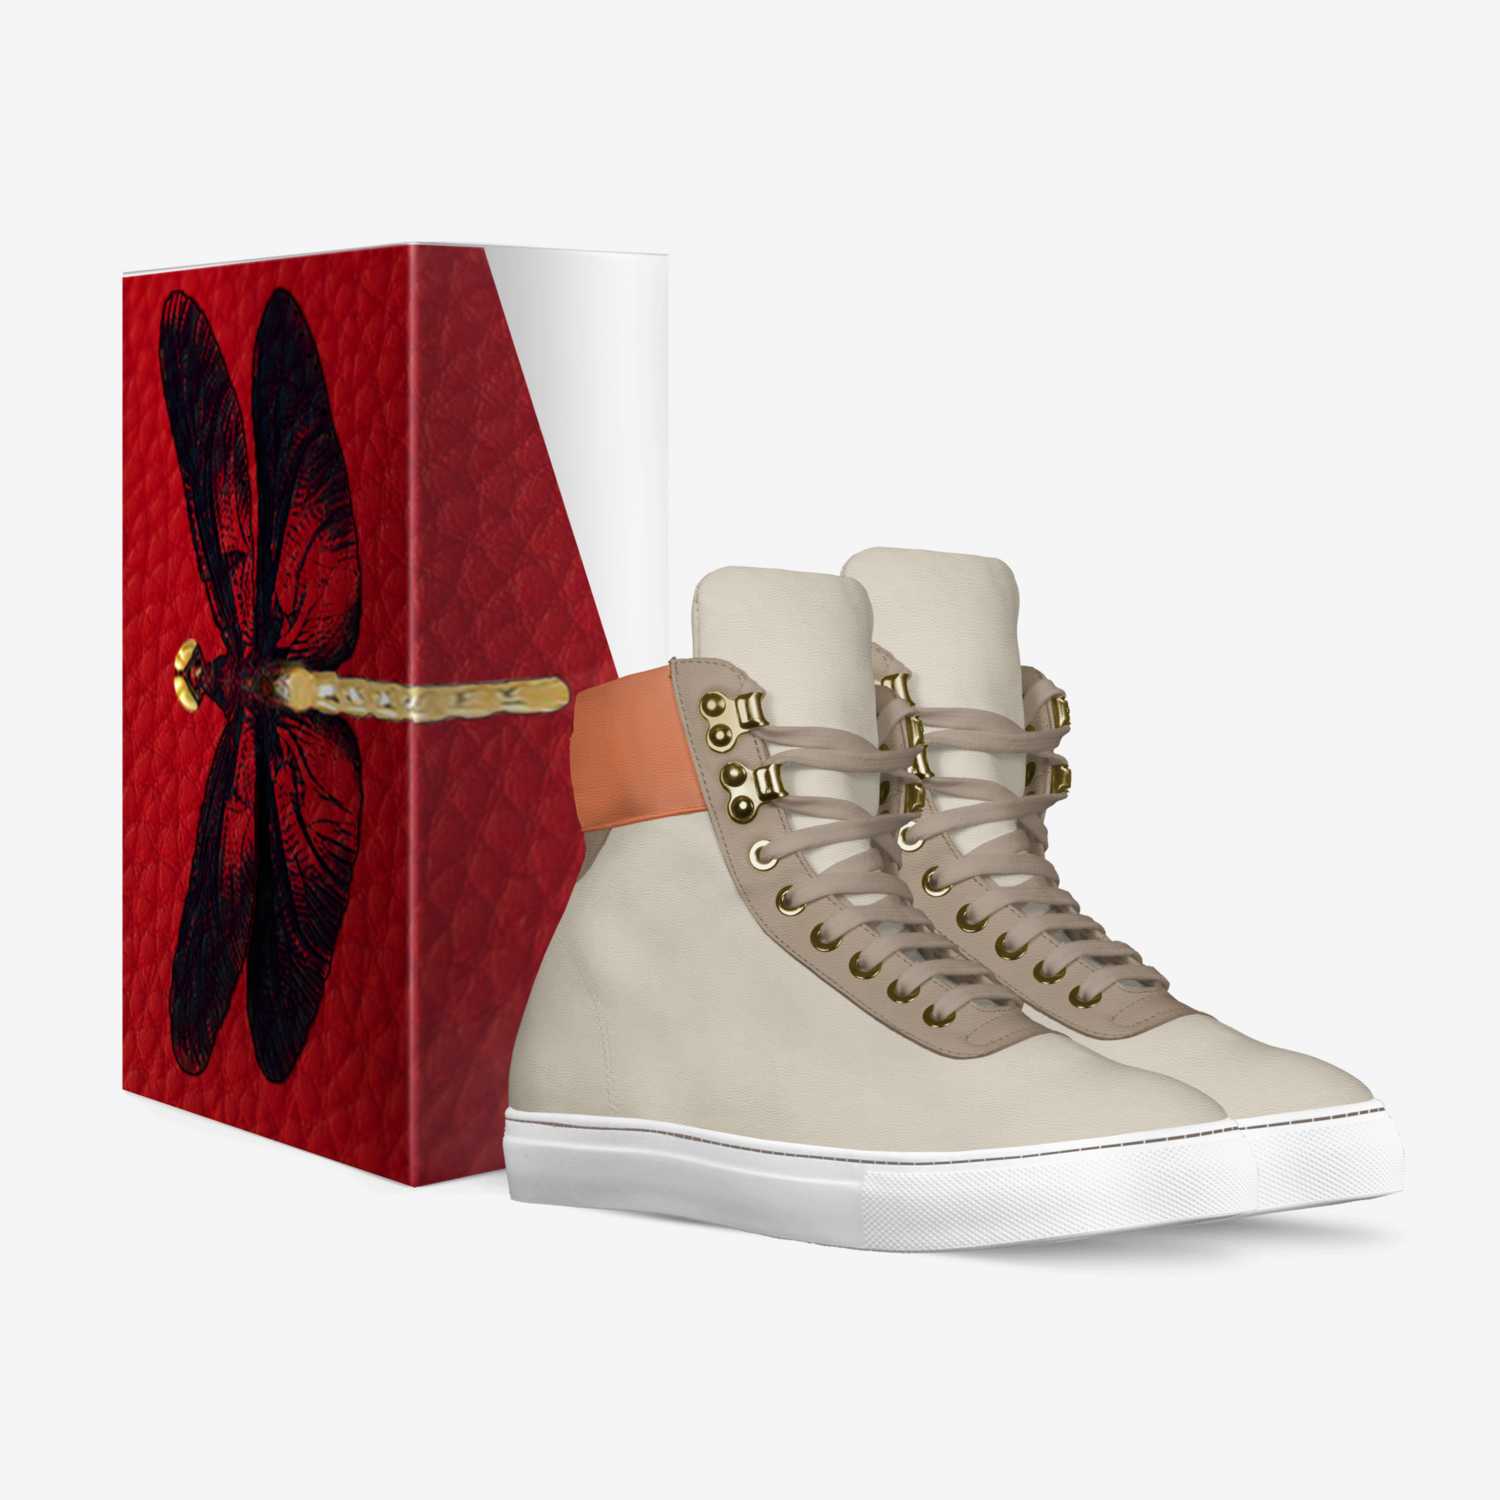 Ivanoe custom made in Italy shoes by Tyrone Francisco | Box view